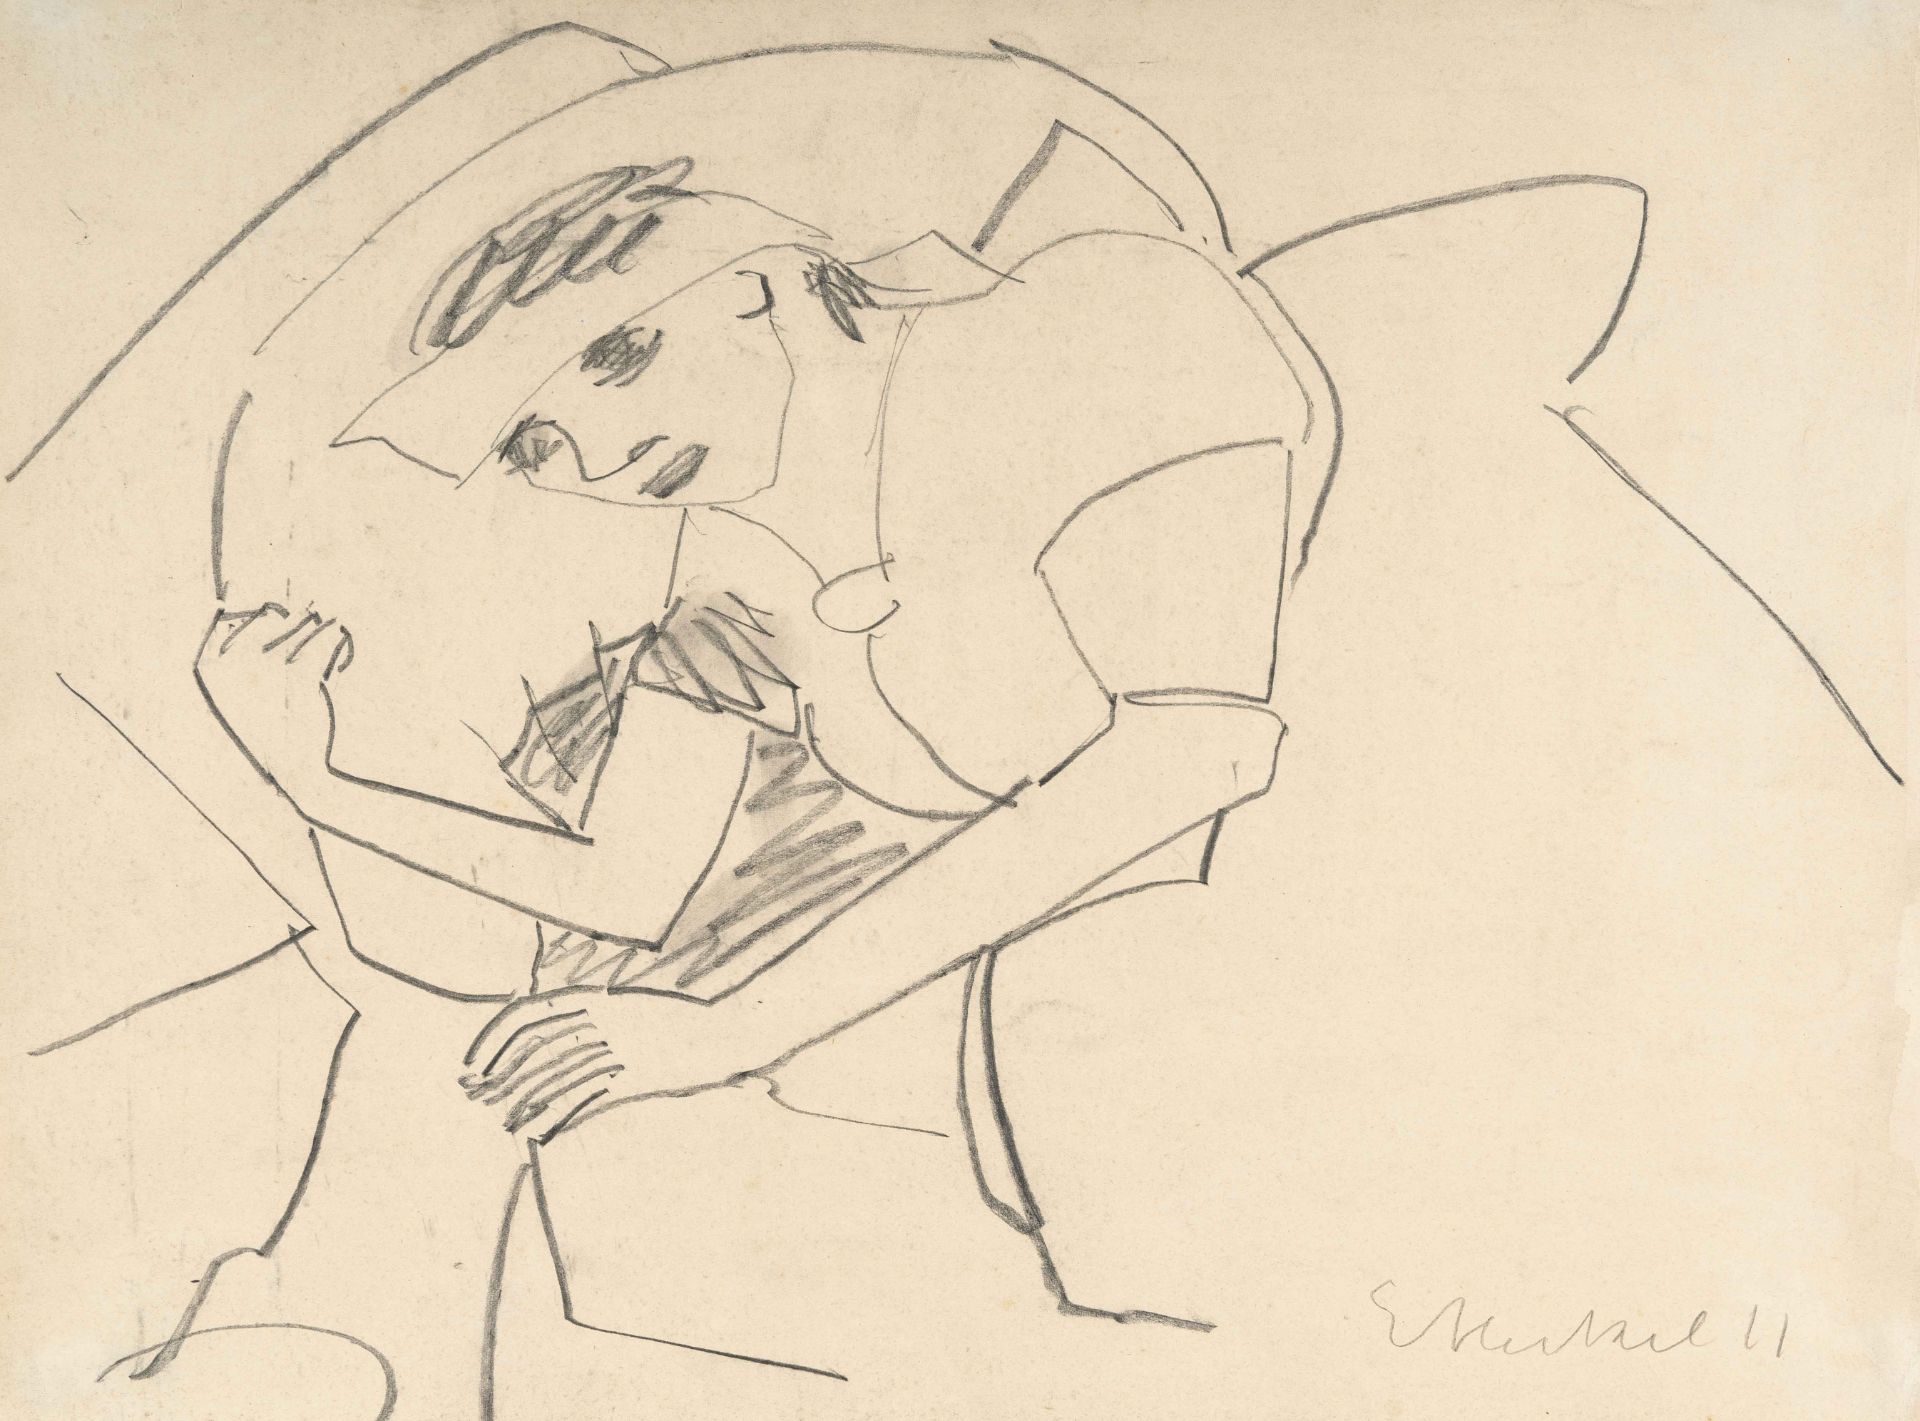 Erich Heckel (1883 Döbeln/Sachsen - Radolfzell 1970) – Reclining woman /sick woman.Chalk on slightly